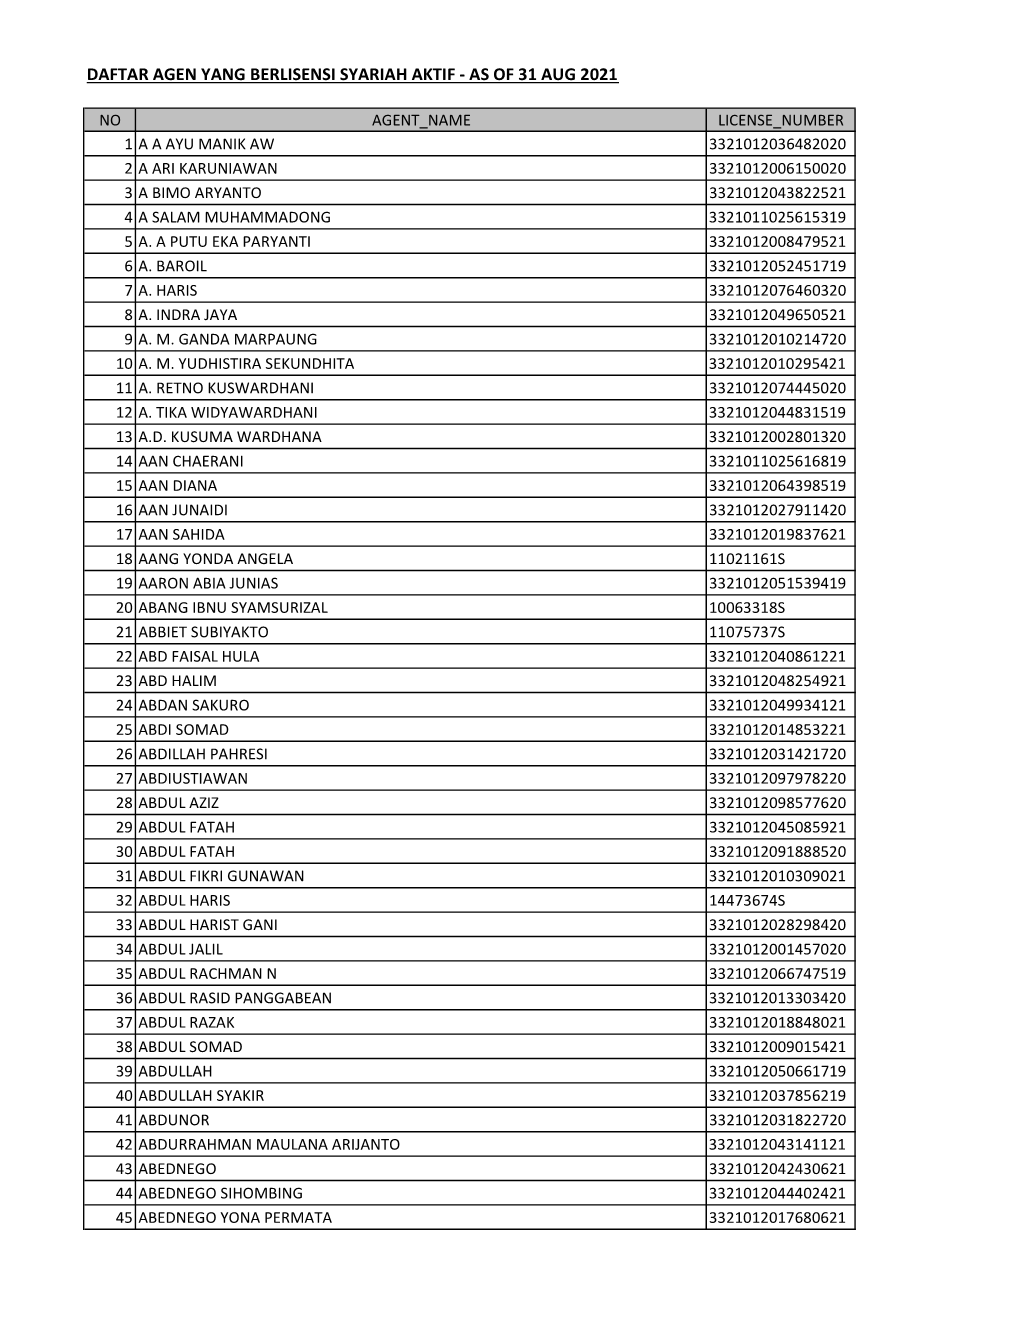 Daftar Agen Berlisensi Aktif As of 31 Aug 2021 (Syariah)